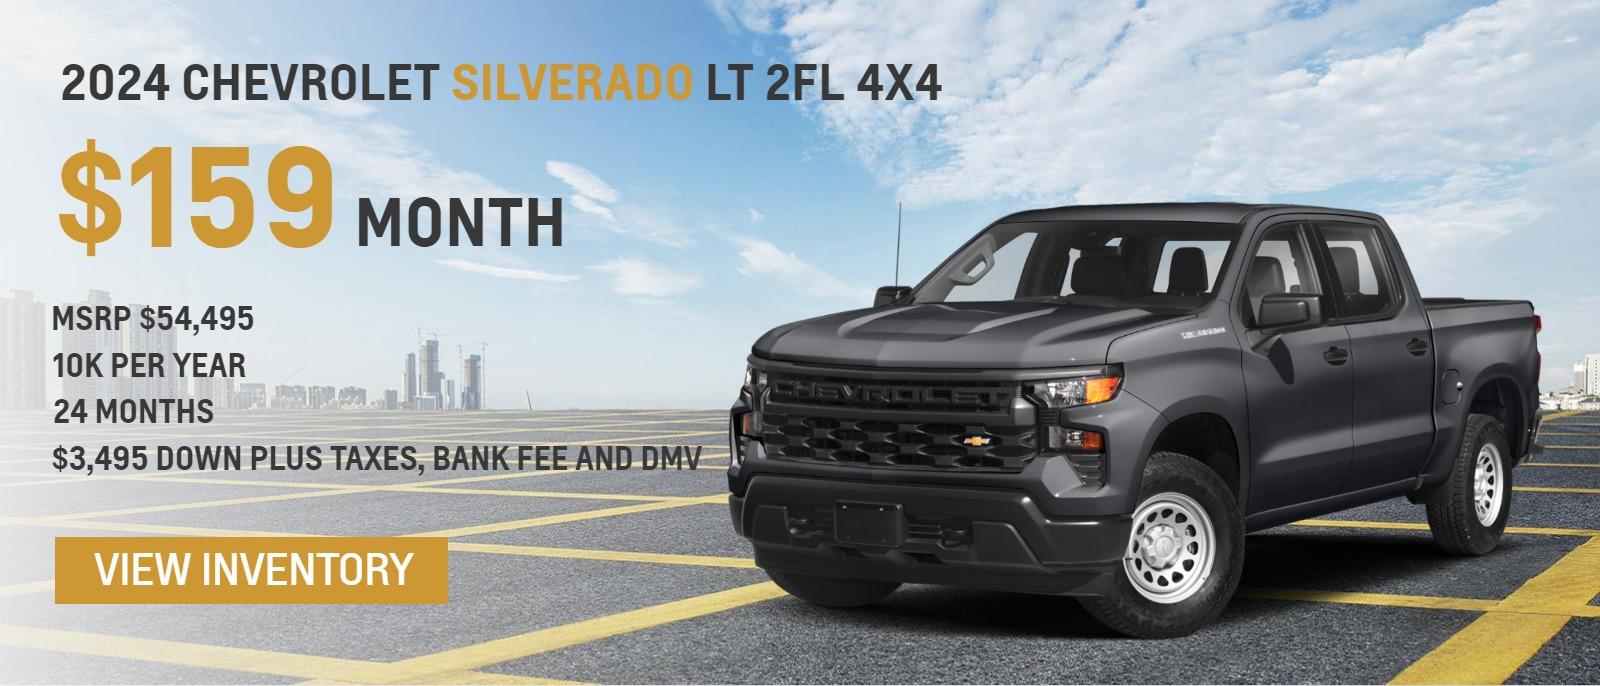 2024 Chevrolet Silverado LT 2FL 4X4
MSRP $54,495.
10k per year
24 months
$159. month
$3,495 down plus taxes, bank fee and DMV